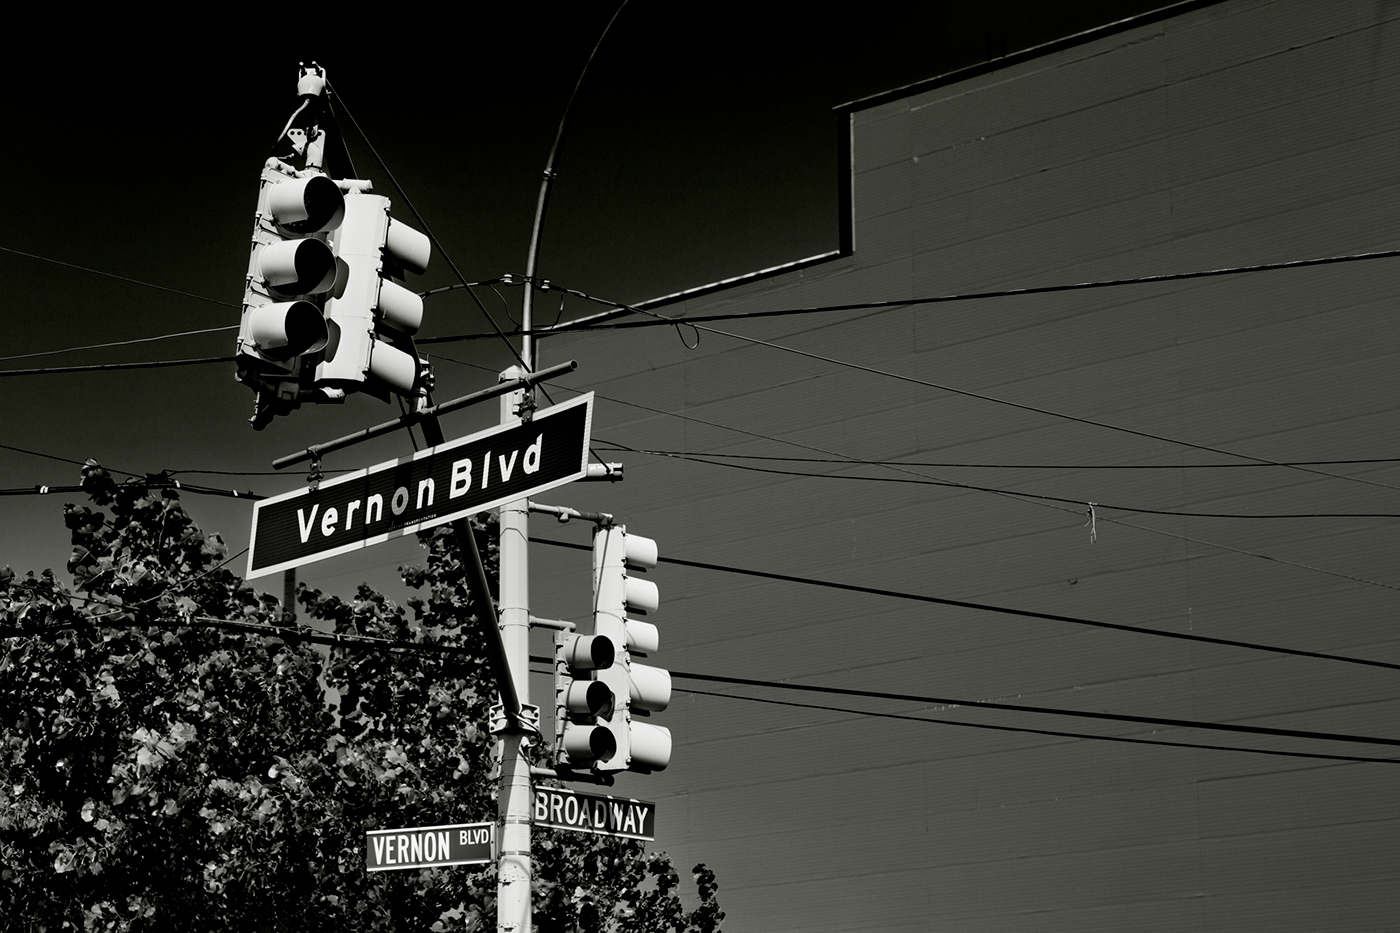 New York street view black & white skies textures reportage Collection